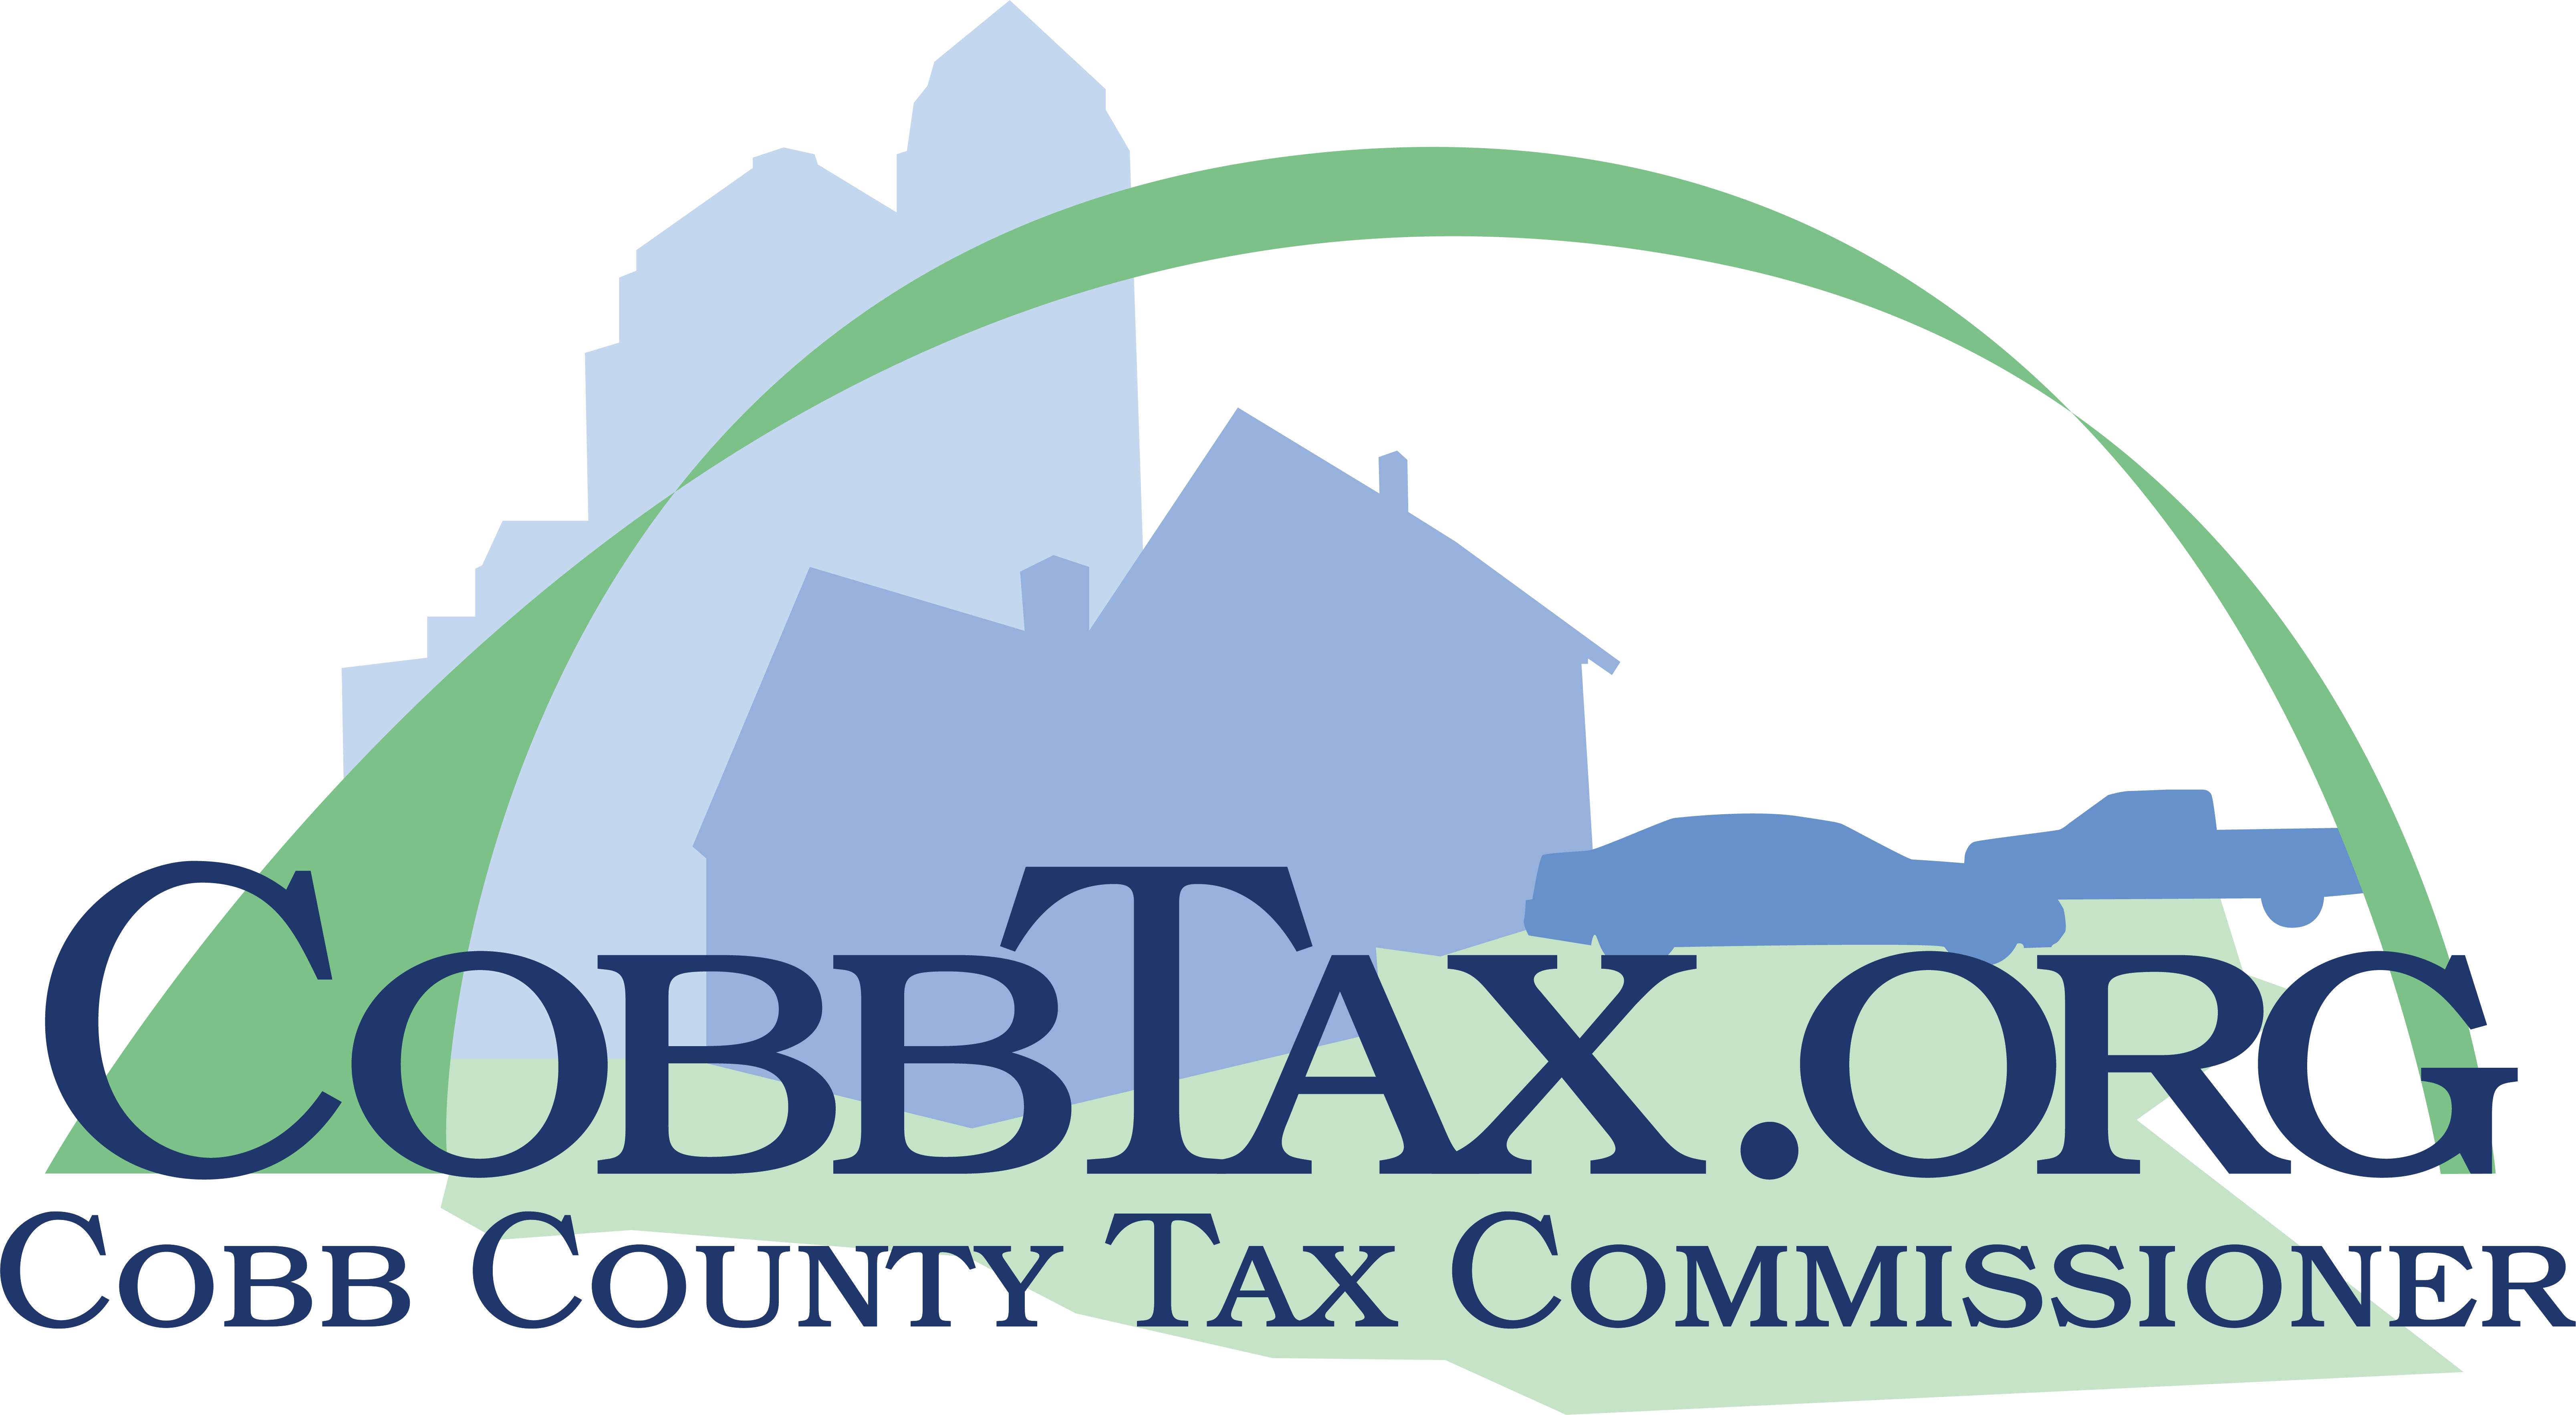 Carla Jackson,
Cobb County Tax Commissioner